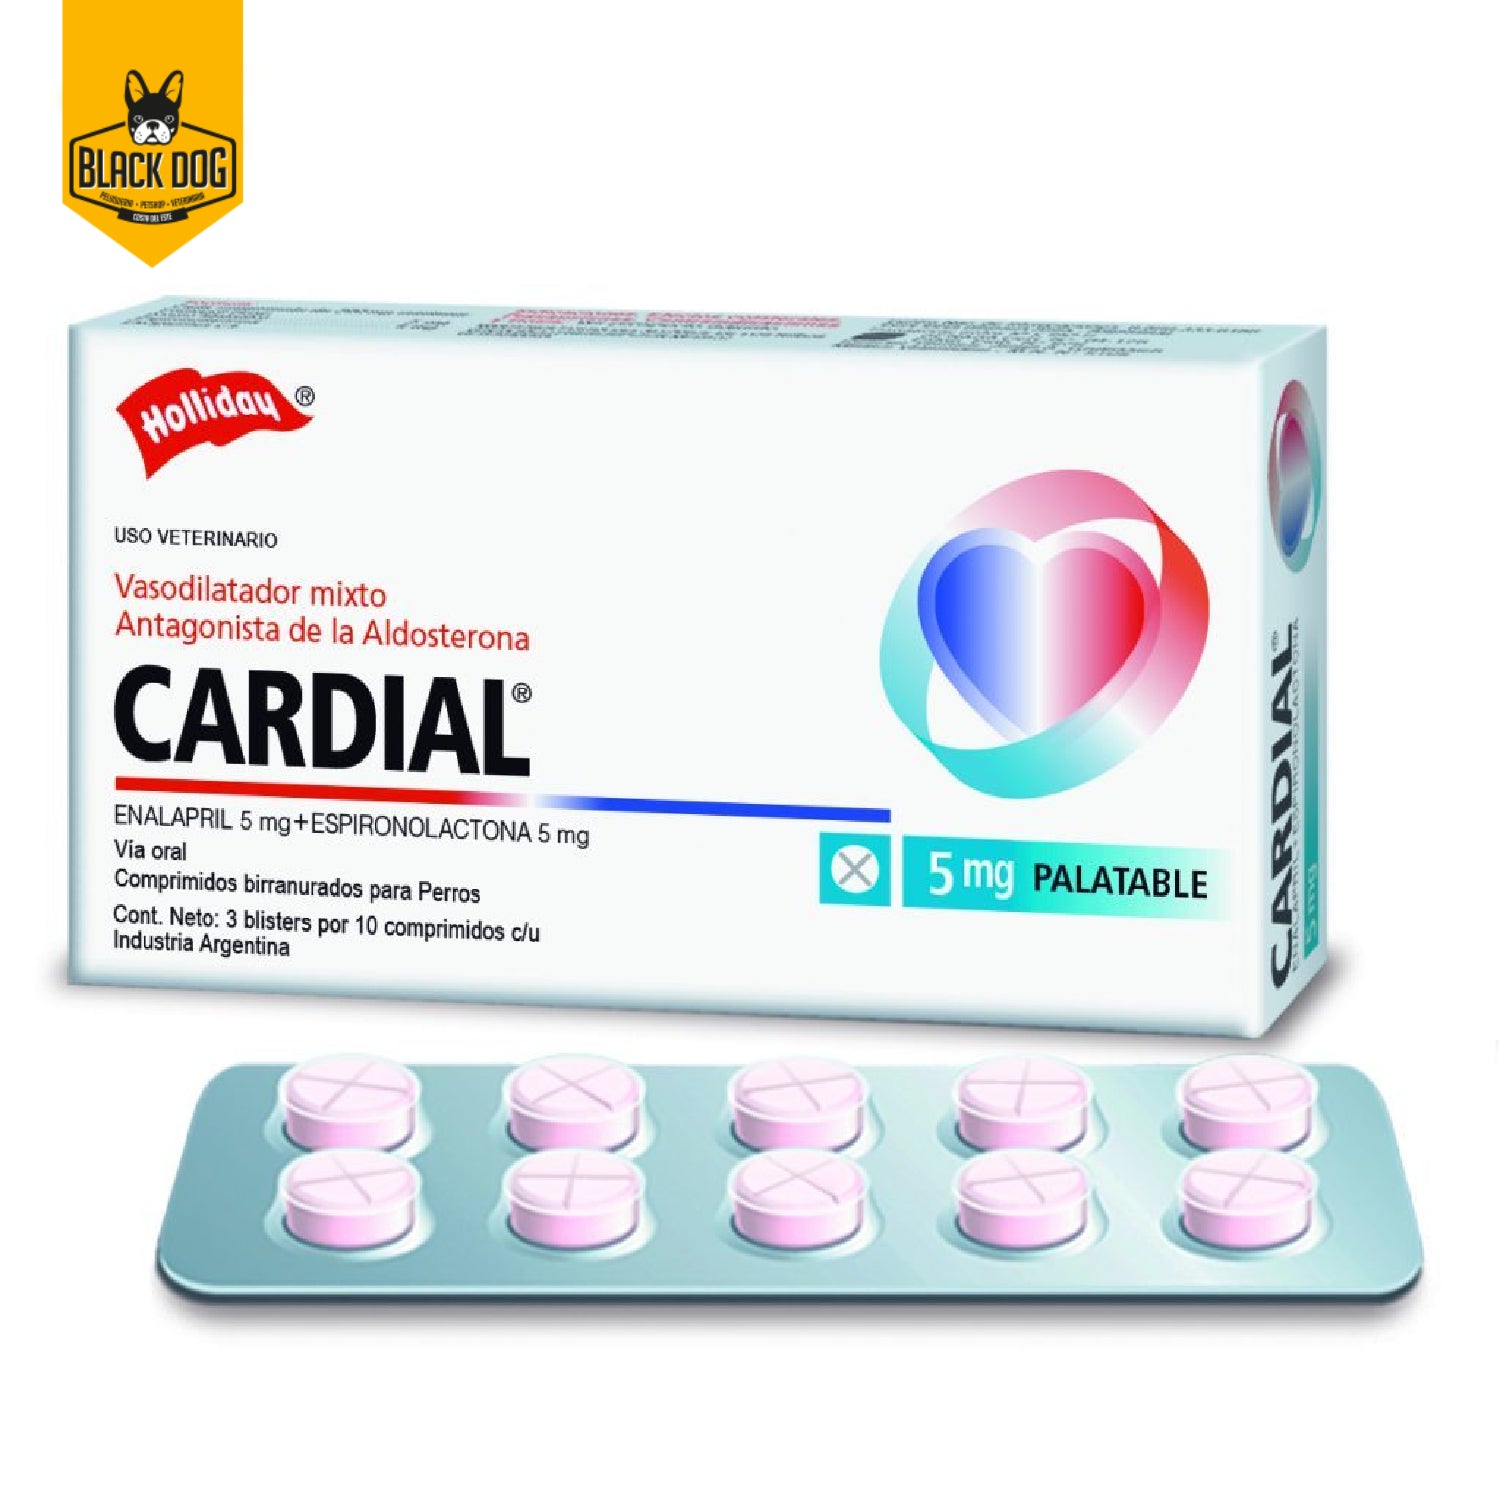 CARDIAL 5 MG | Enalapril - Espironolactona | 30 Comprimidos - BlackDogPanama